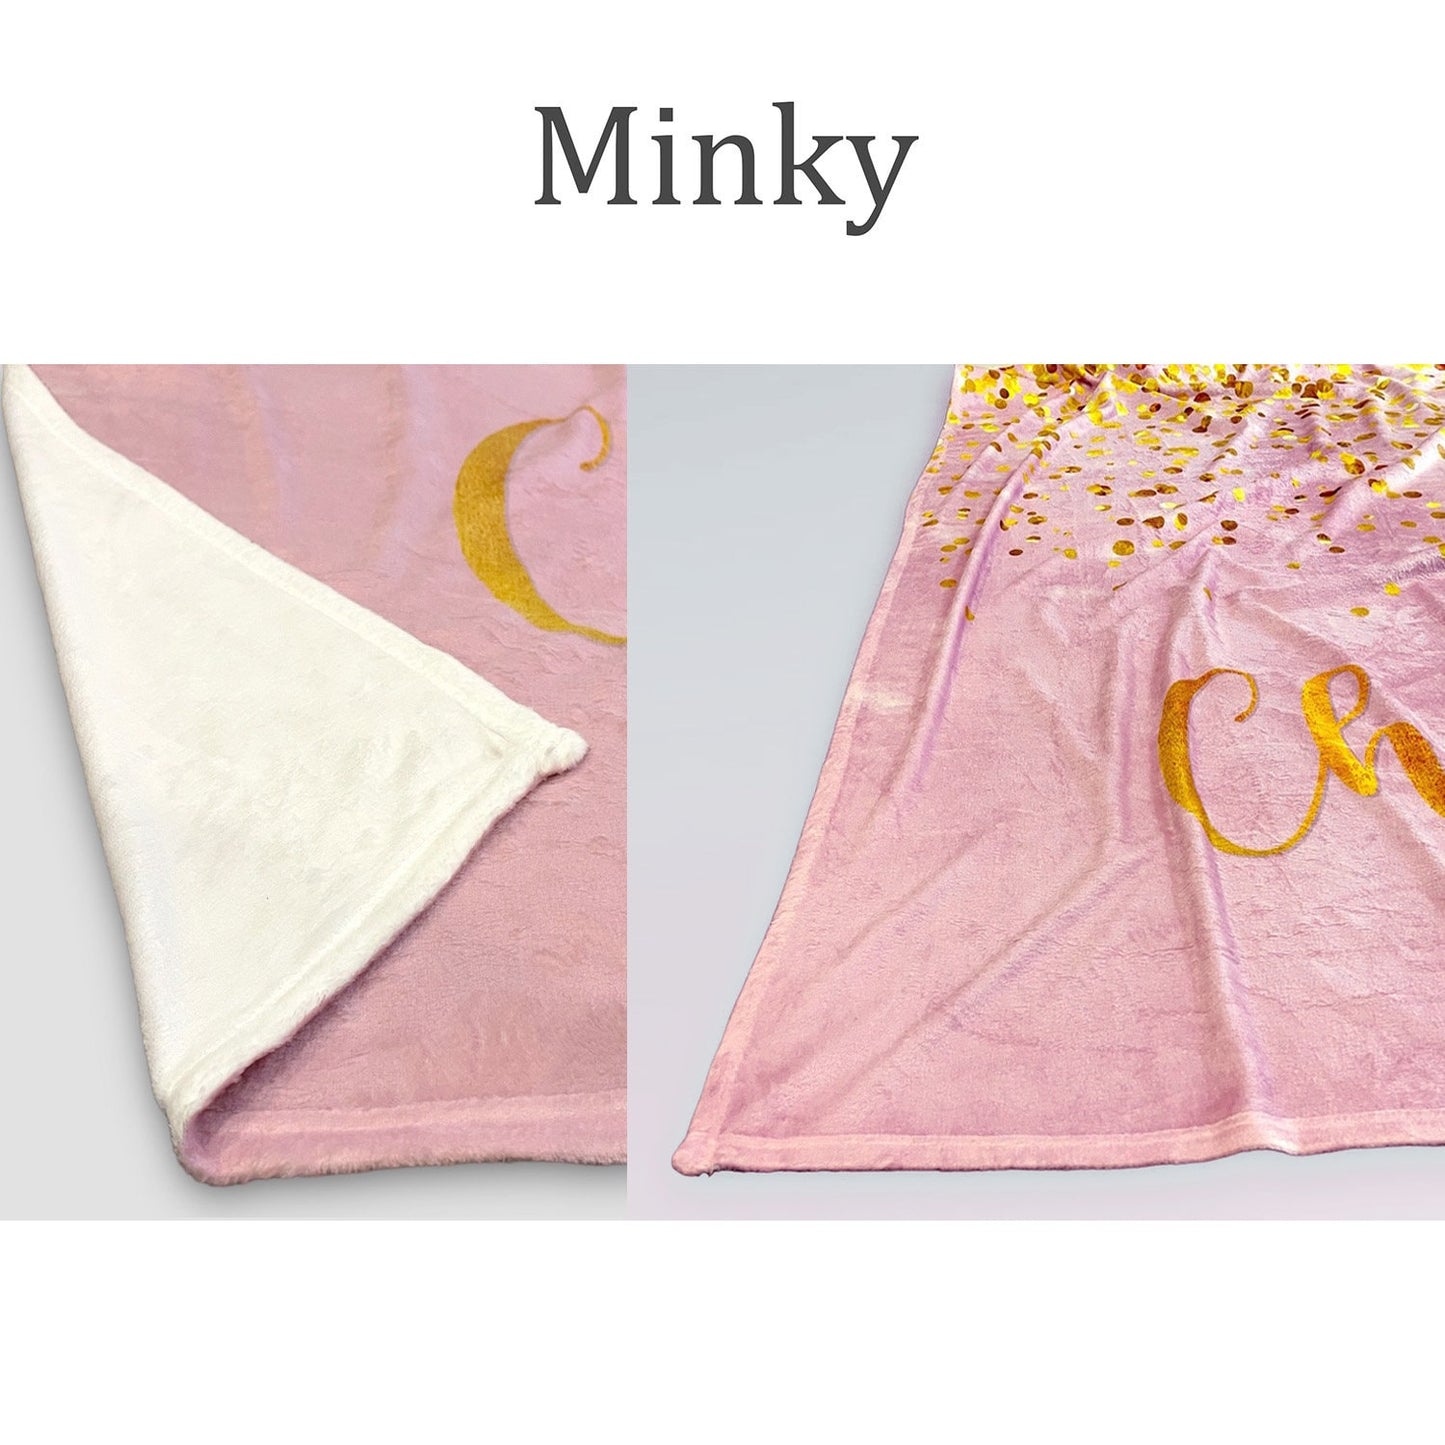 Happy Face Flower Design personalize name blanket, Minky or Sherpa custom blanket, Baby blanket, birthday gift idea